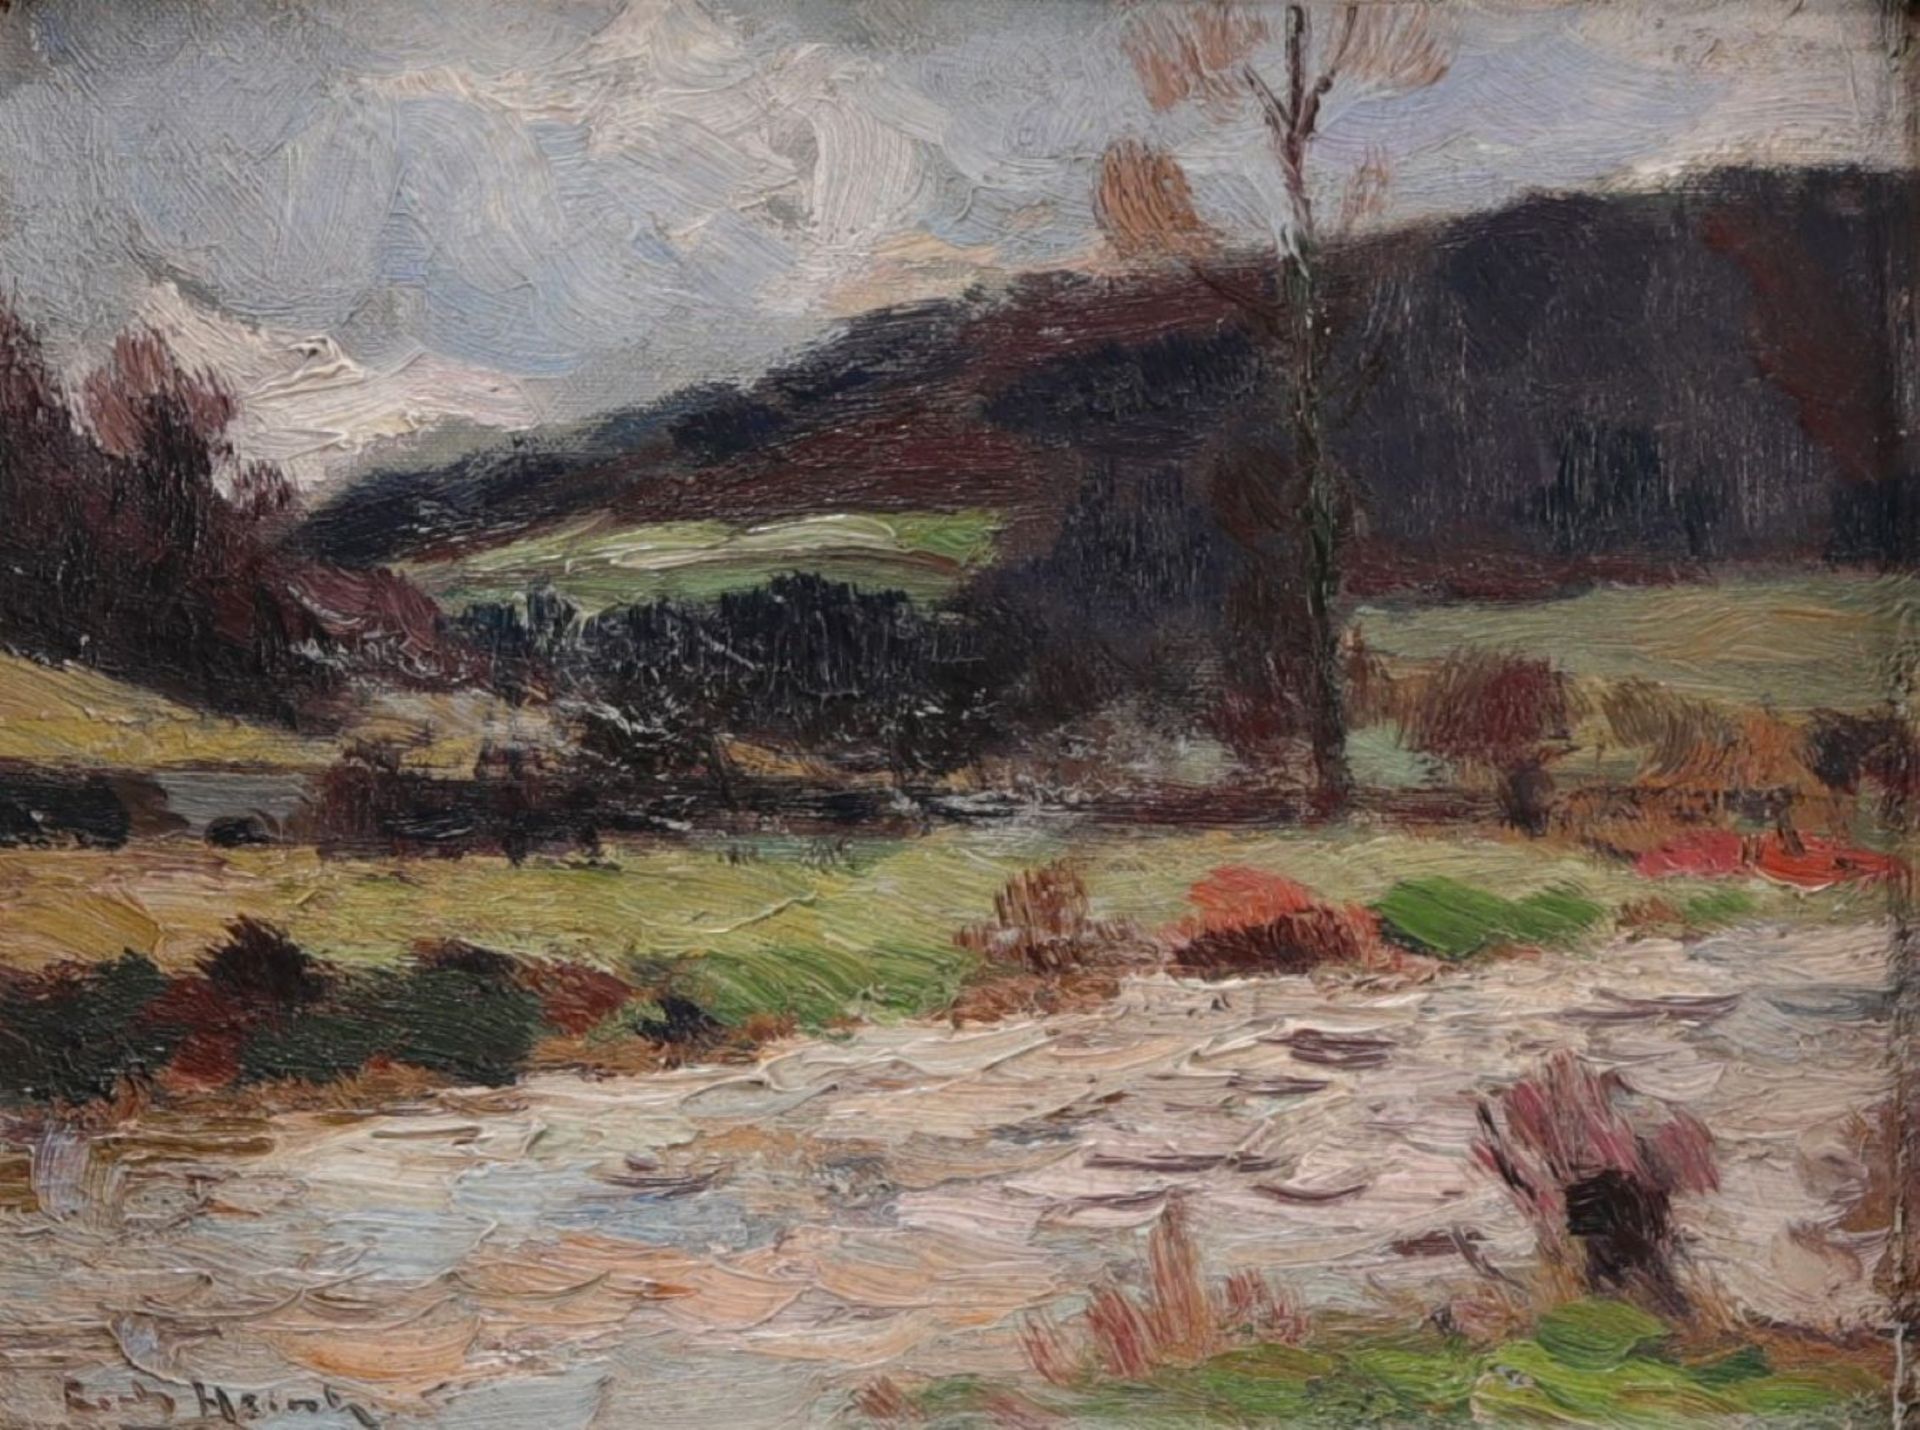 Richard HEINTZ (1871-1929) "Landscape and river" Oil on canvas.